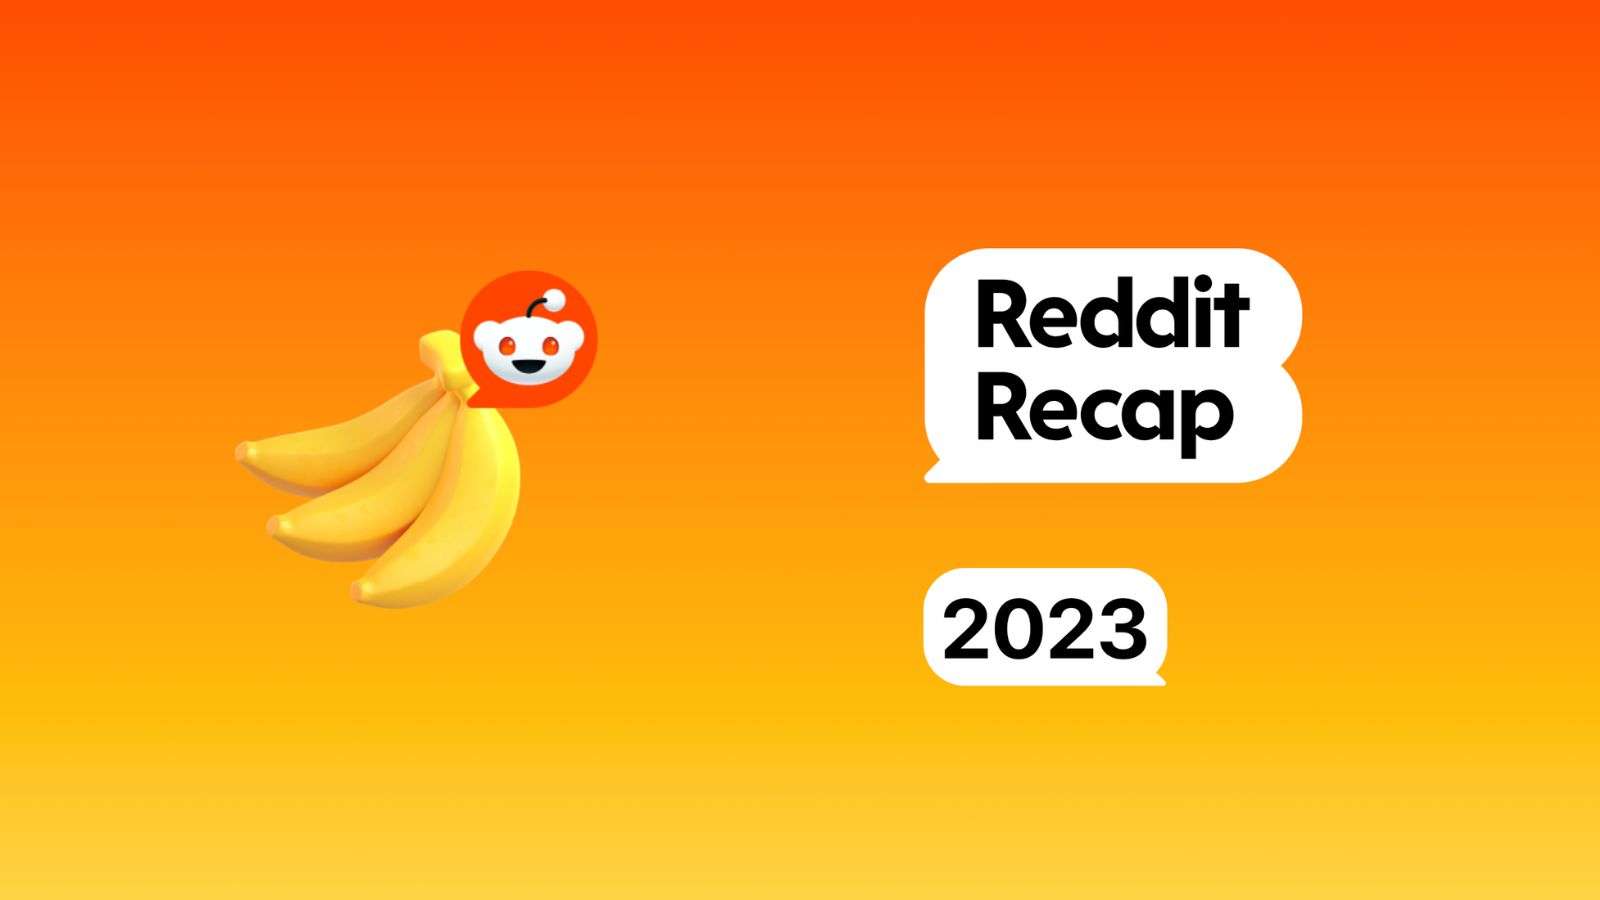 Reddit recap 2023